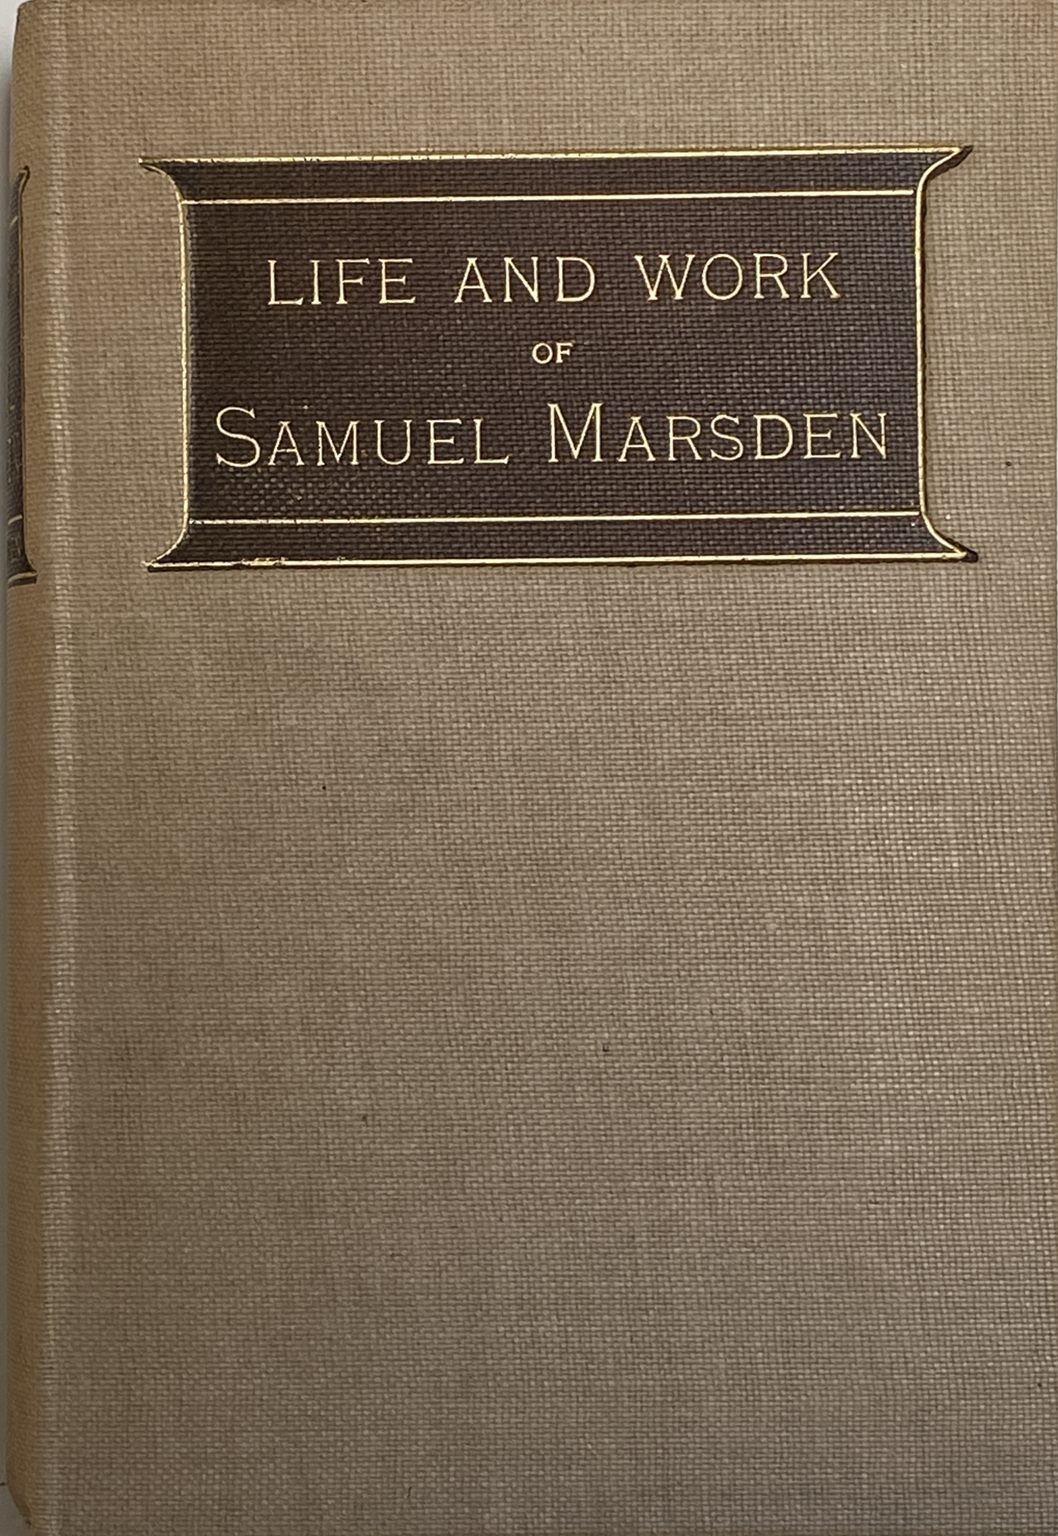 LIFE AND WORK of SAMUEL MARSDEN